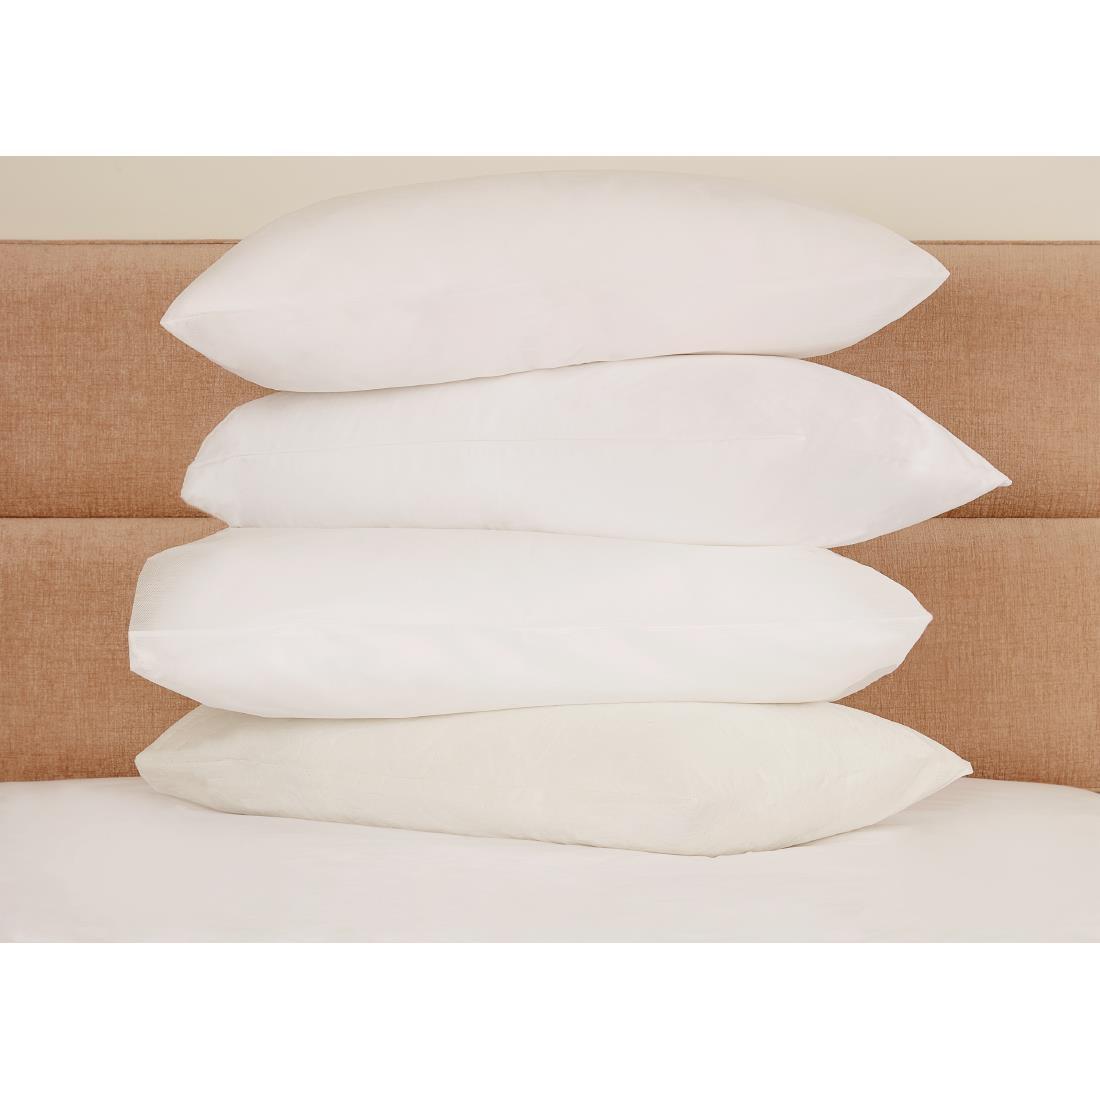 Mitre Essentials Zipped Pillow Protector - HD047  - 1